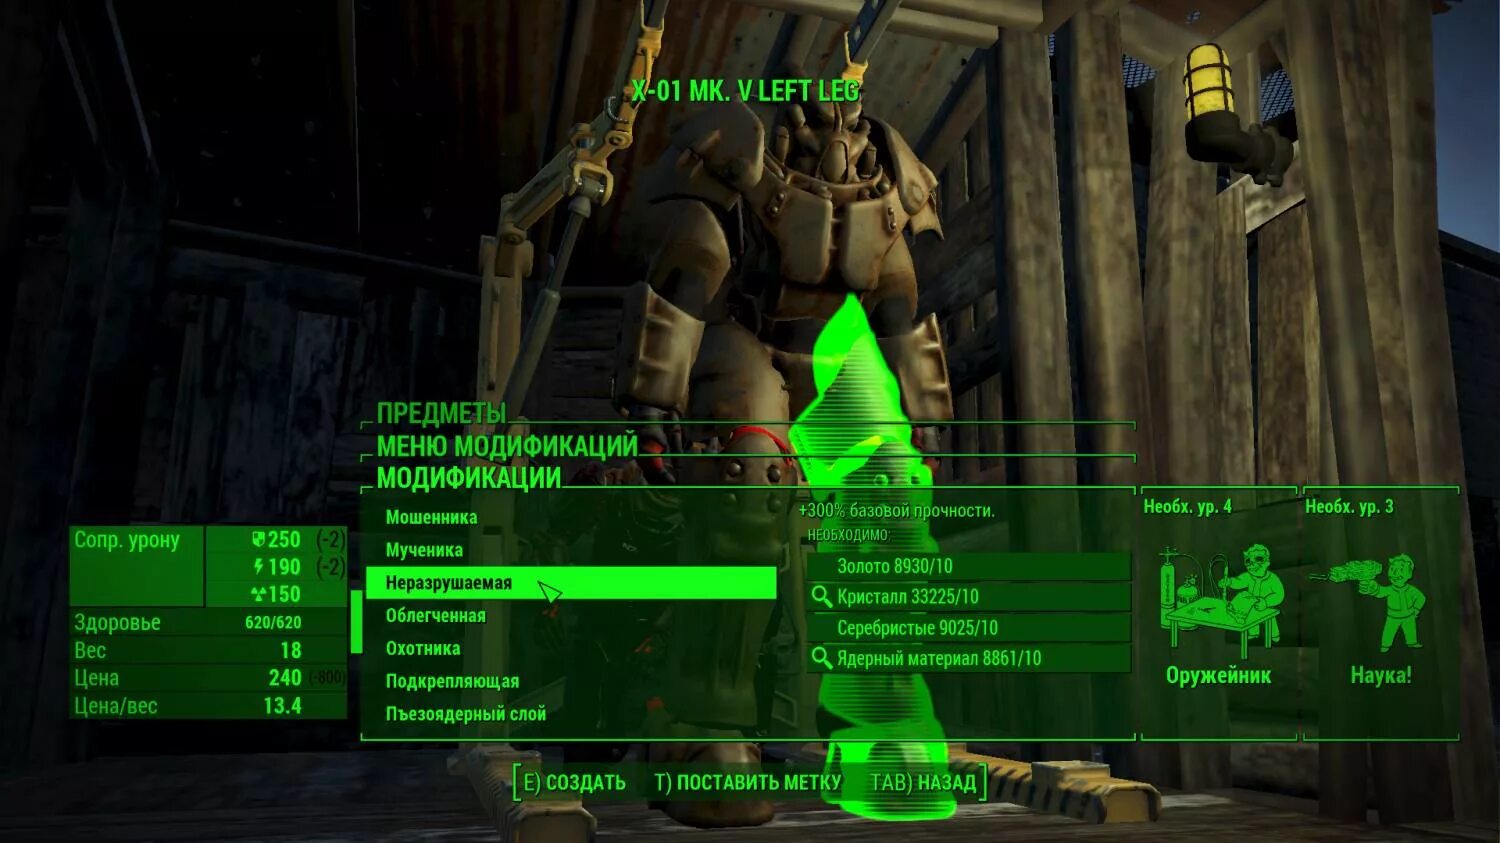 Fallout как поменять язык на русский. Fallout 4 - 1.10.163.0. Fallout 4 характеристики. Имя в Fallout. Fallout группировки.